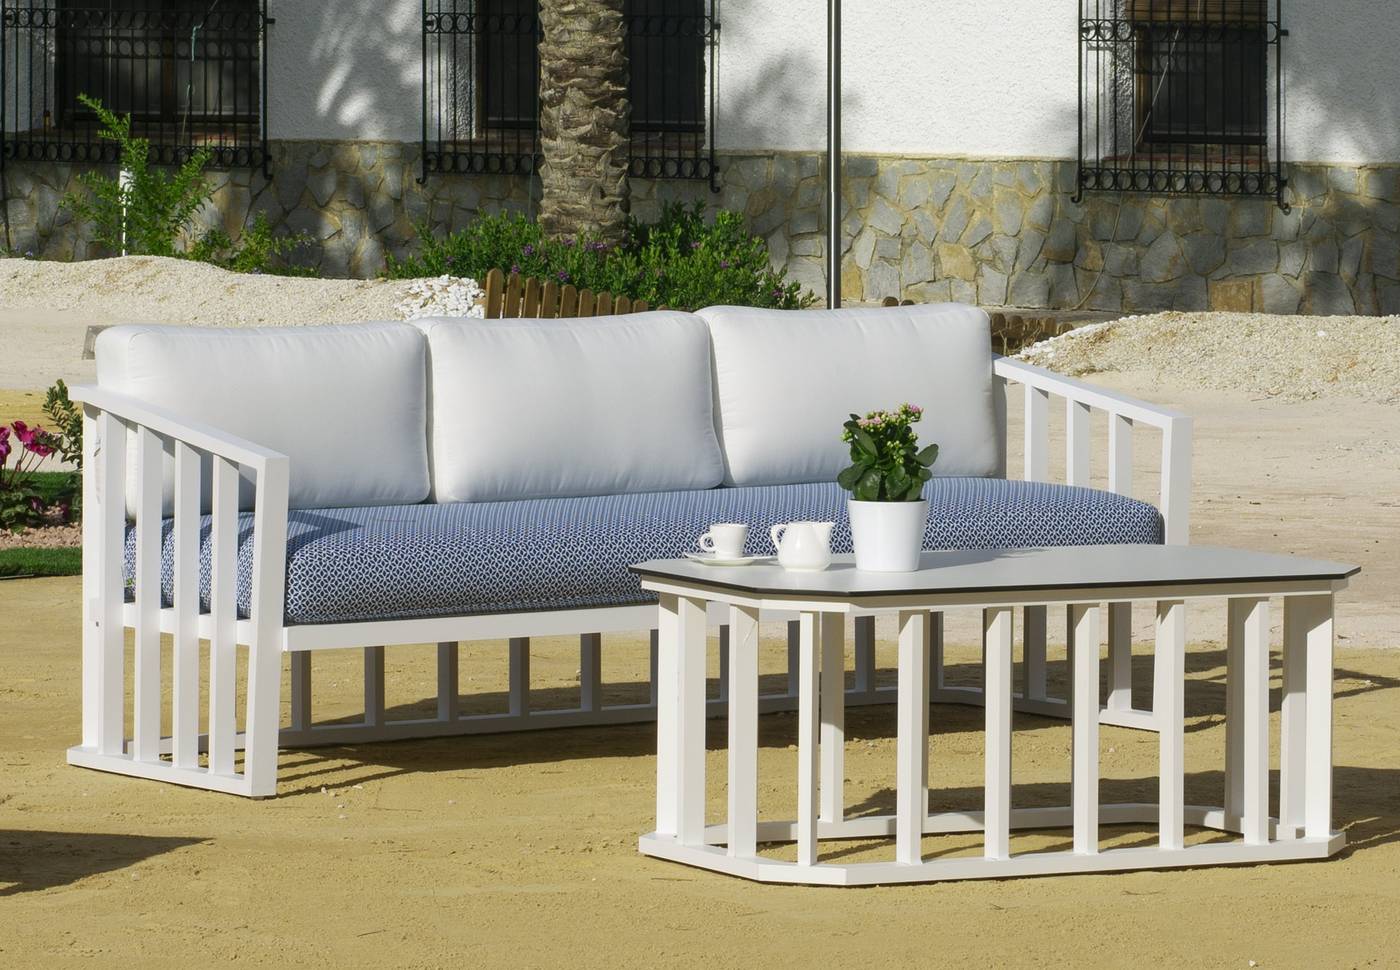 Set Aluminio Birmania-8 - Conjunto confort aluminio: 1 sofá 3 plazas + 2 sillones + 1 mesa de centro. Disponible en color blanco, antracita, champagne, plata o marrón.